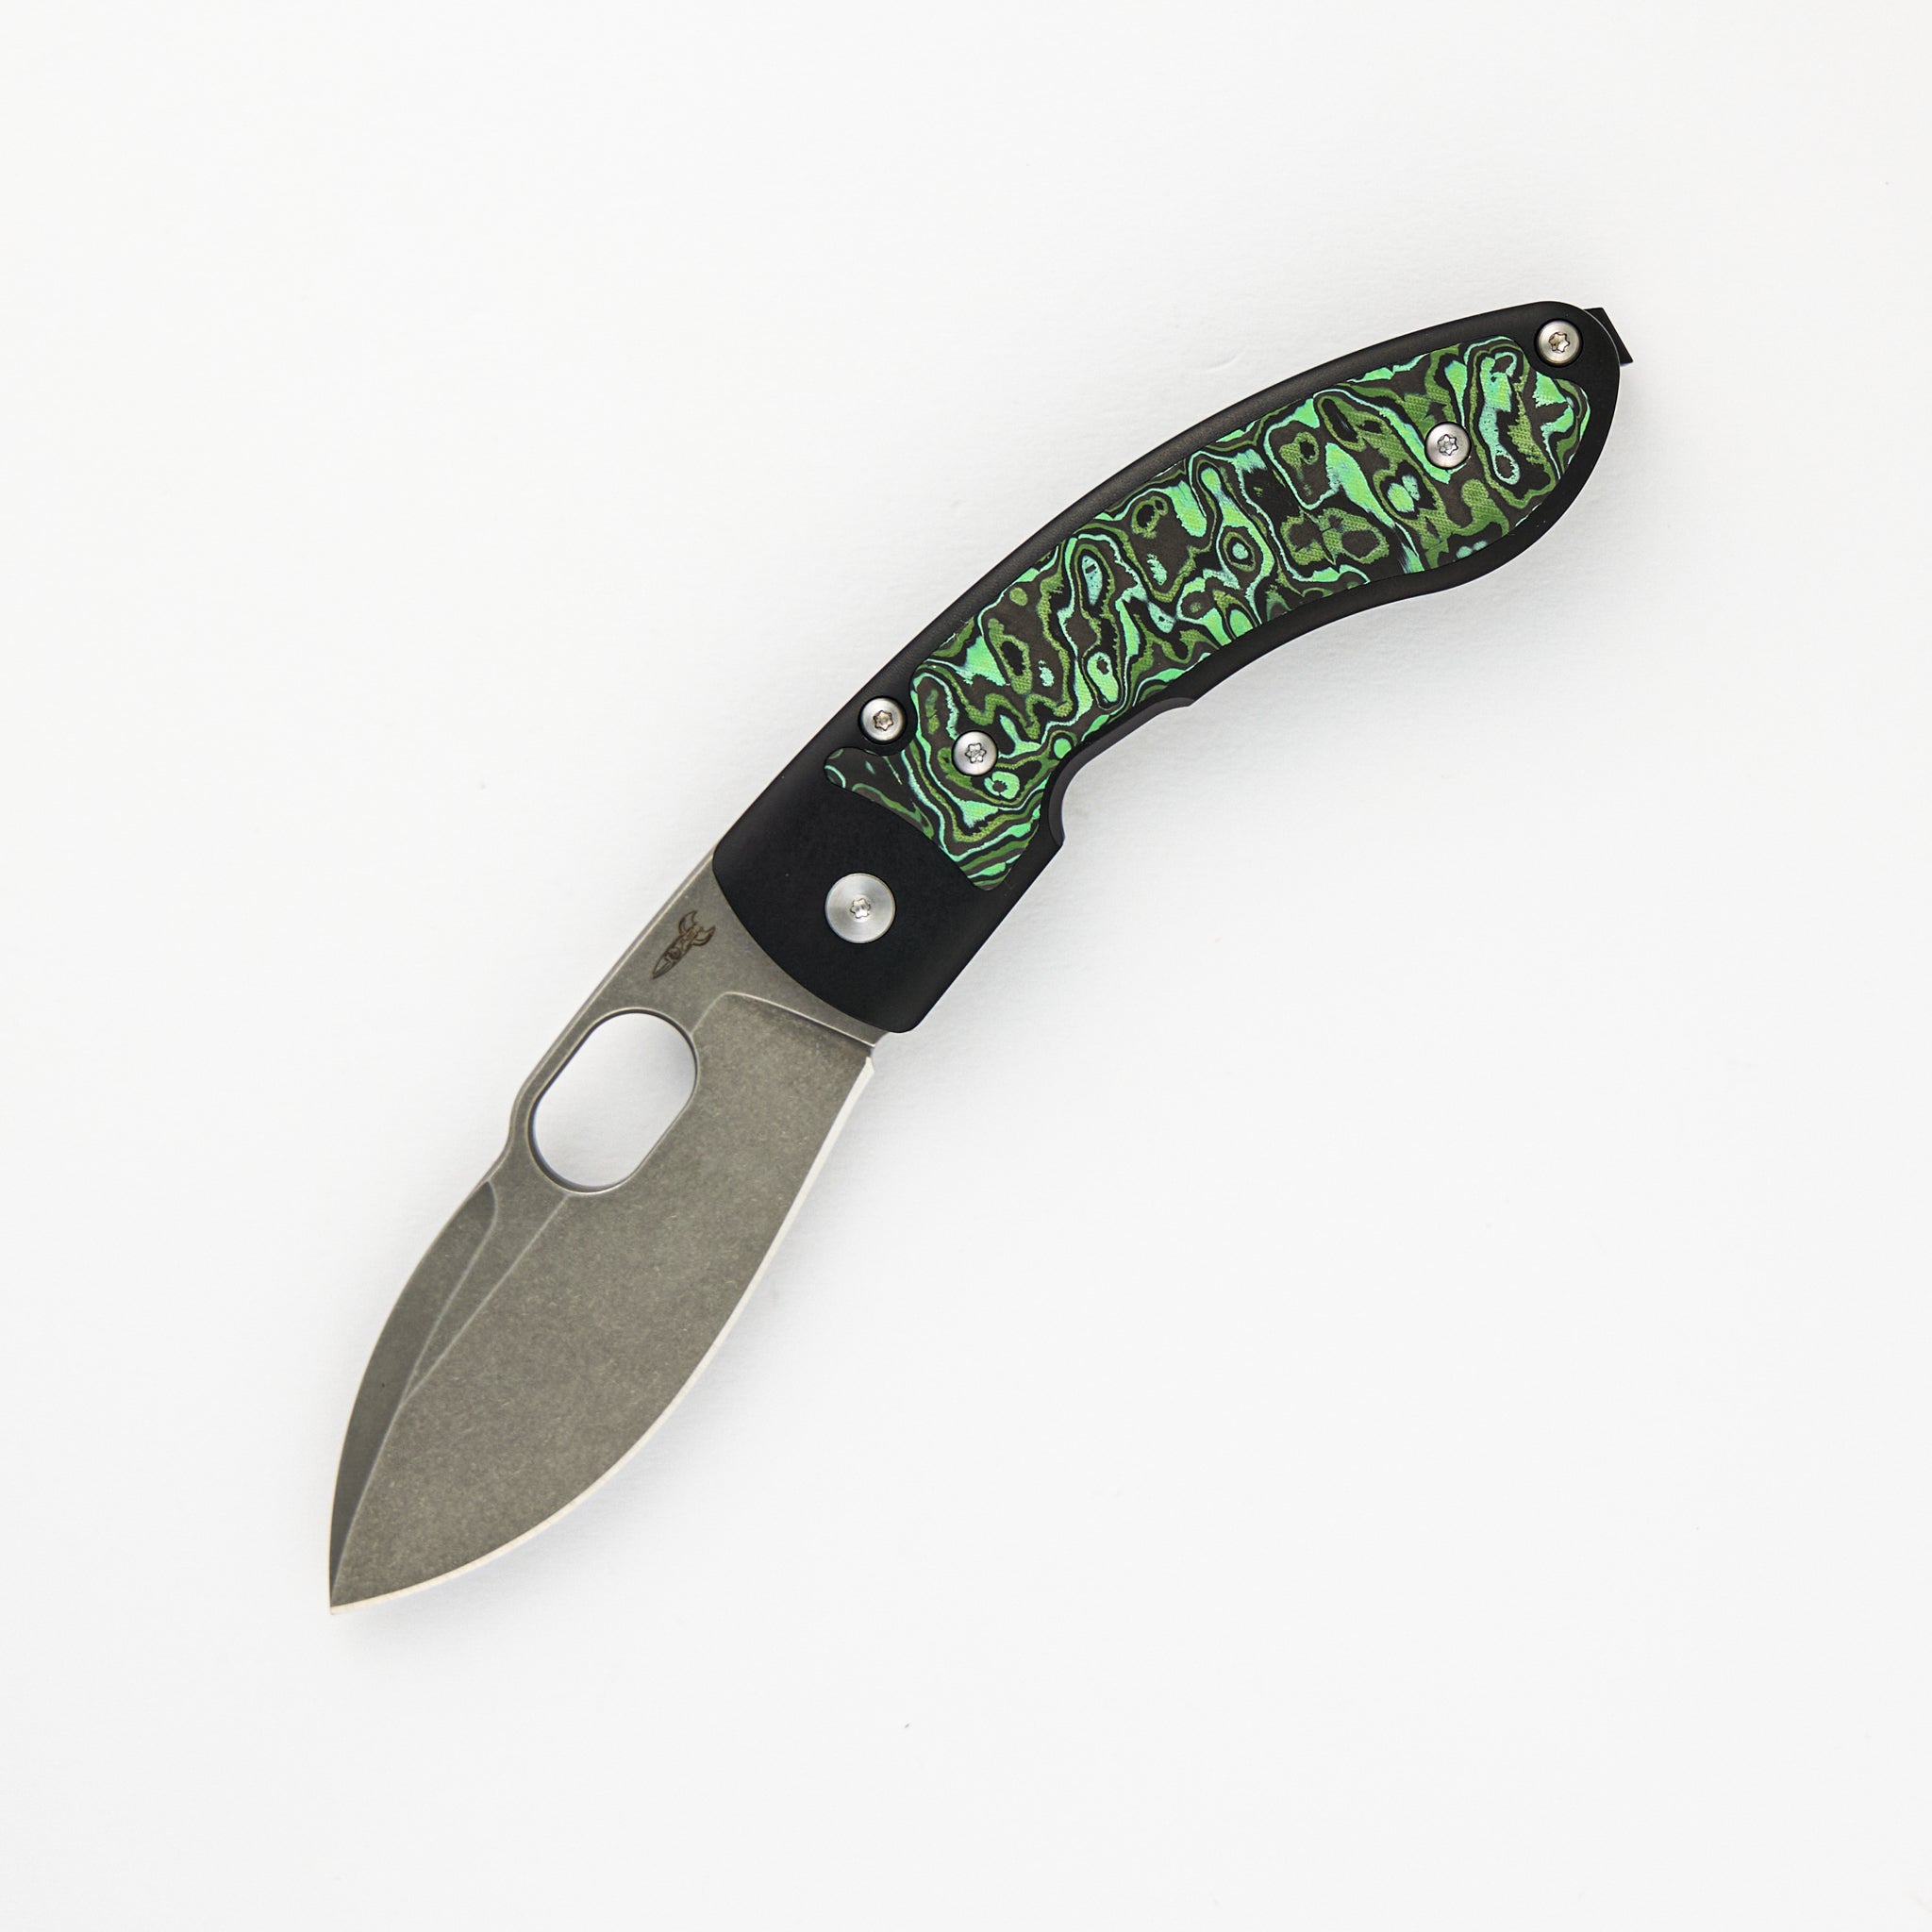 D Rocket Design Lum Leaf (Style 10) – Green/Black Carbon Fiber Inlays – Stonewash S90V Blade